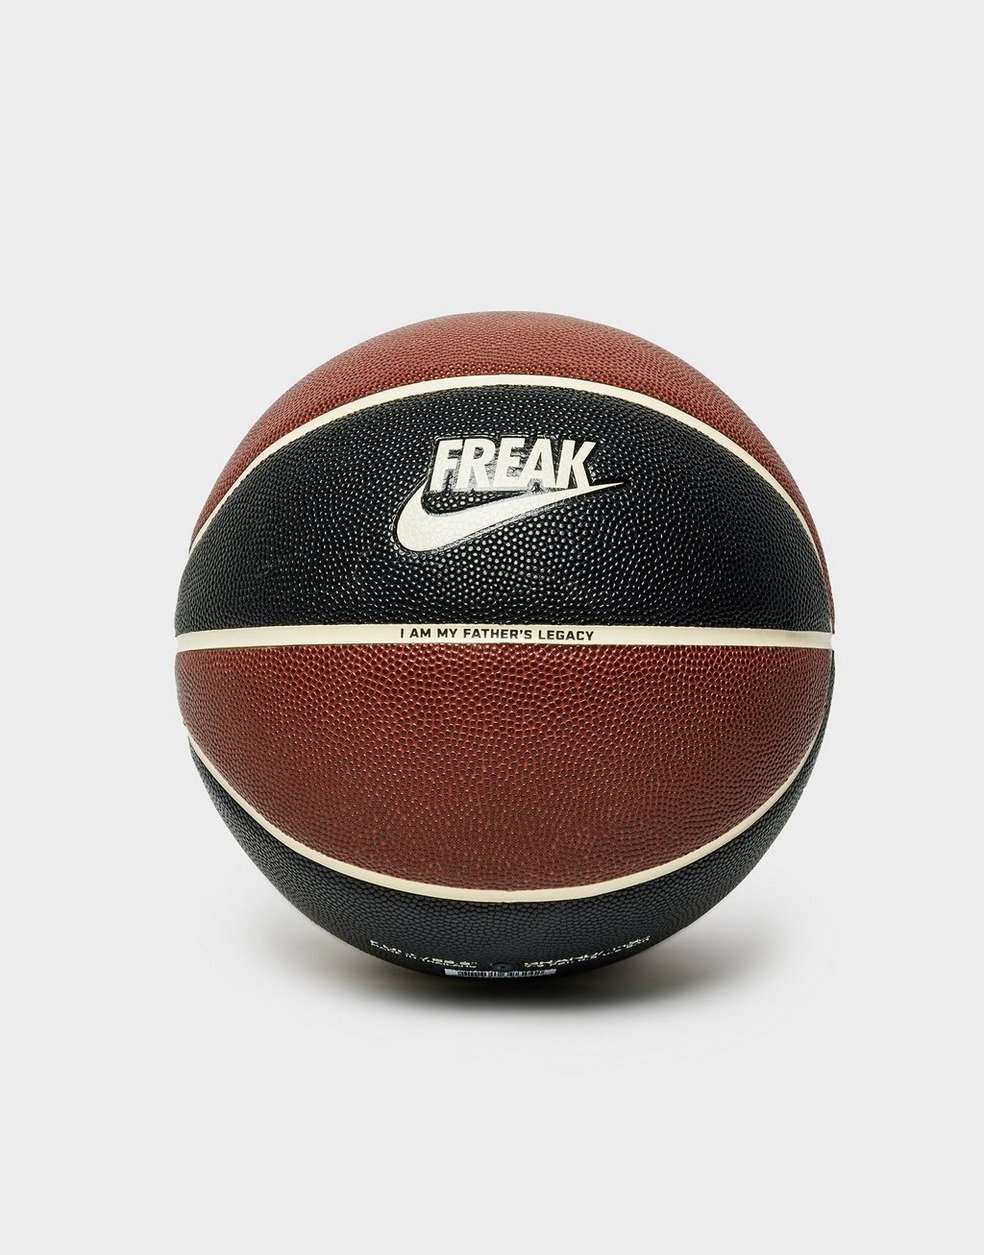 jd-sports.com.au | Nike Giannis Antetokounmpo "Freak" All Court Basketball Size 7